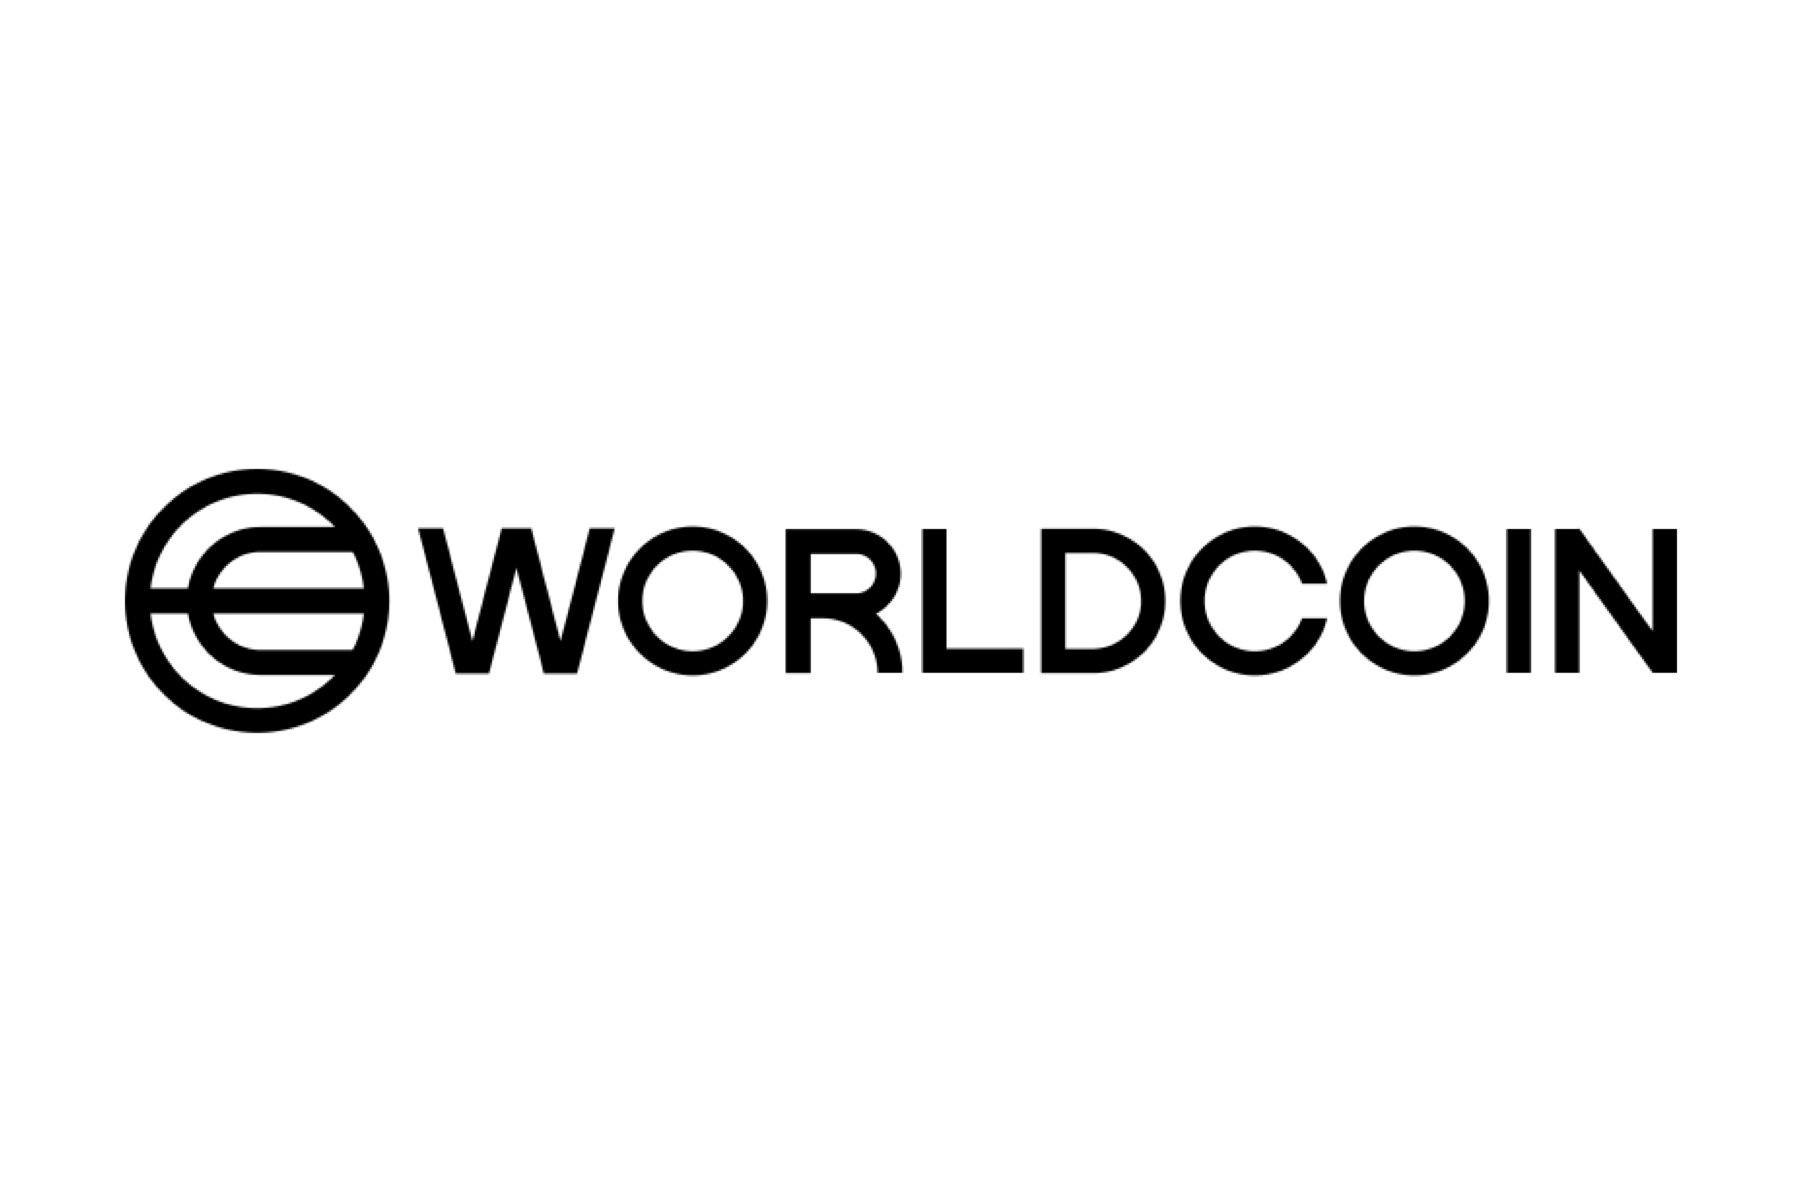 Worldcoin's Innovative World ID: Digital Passport